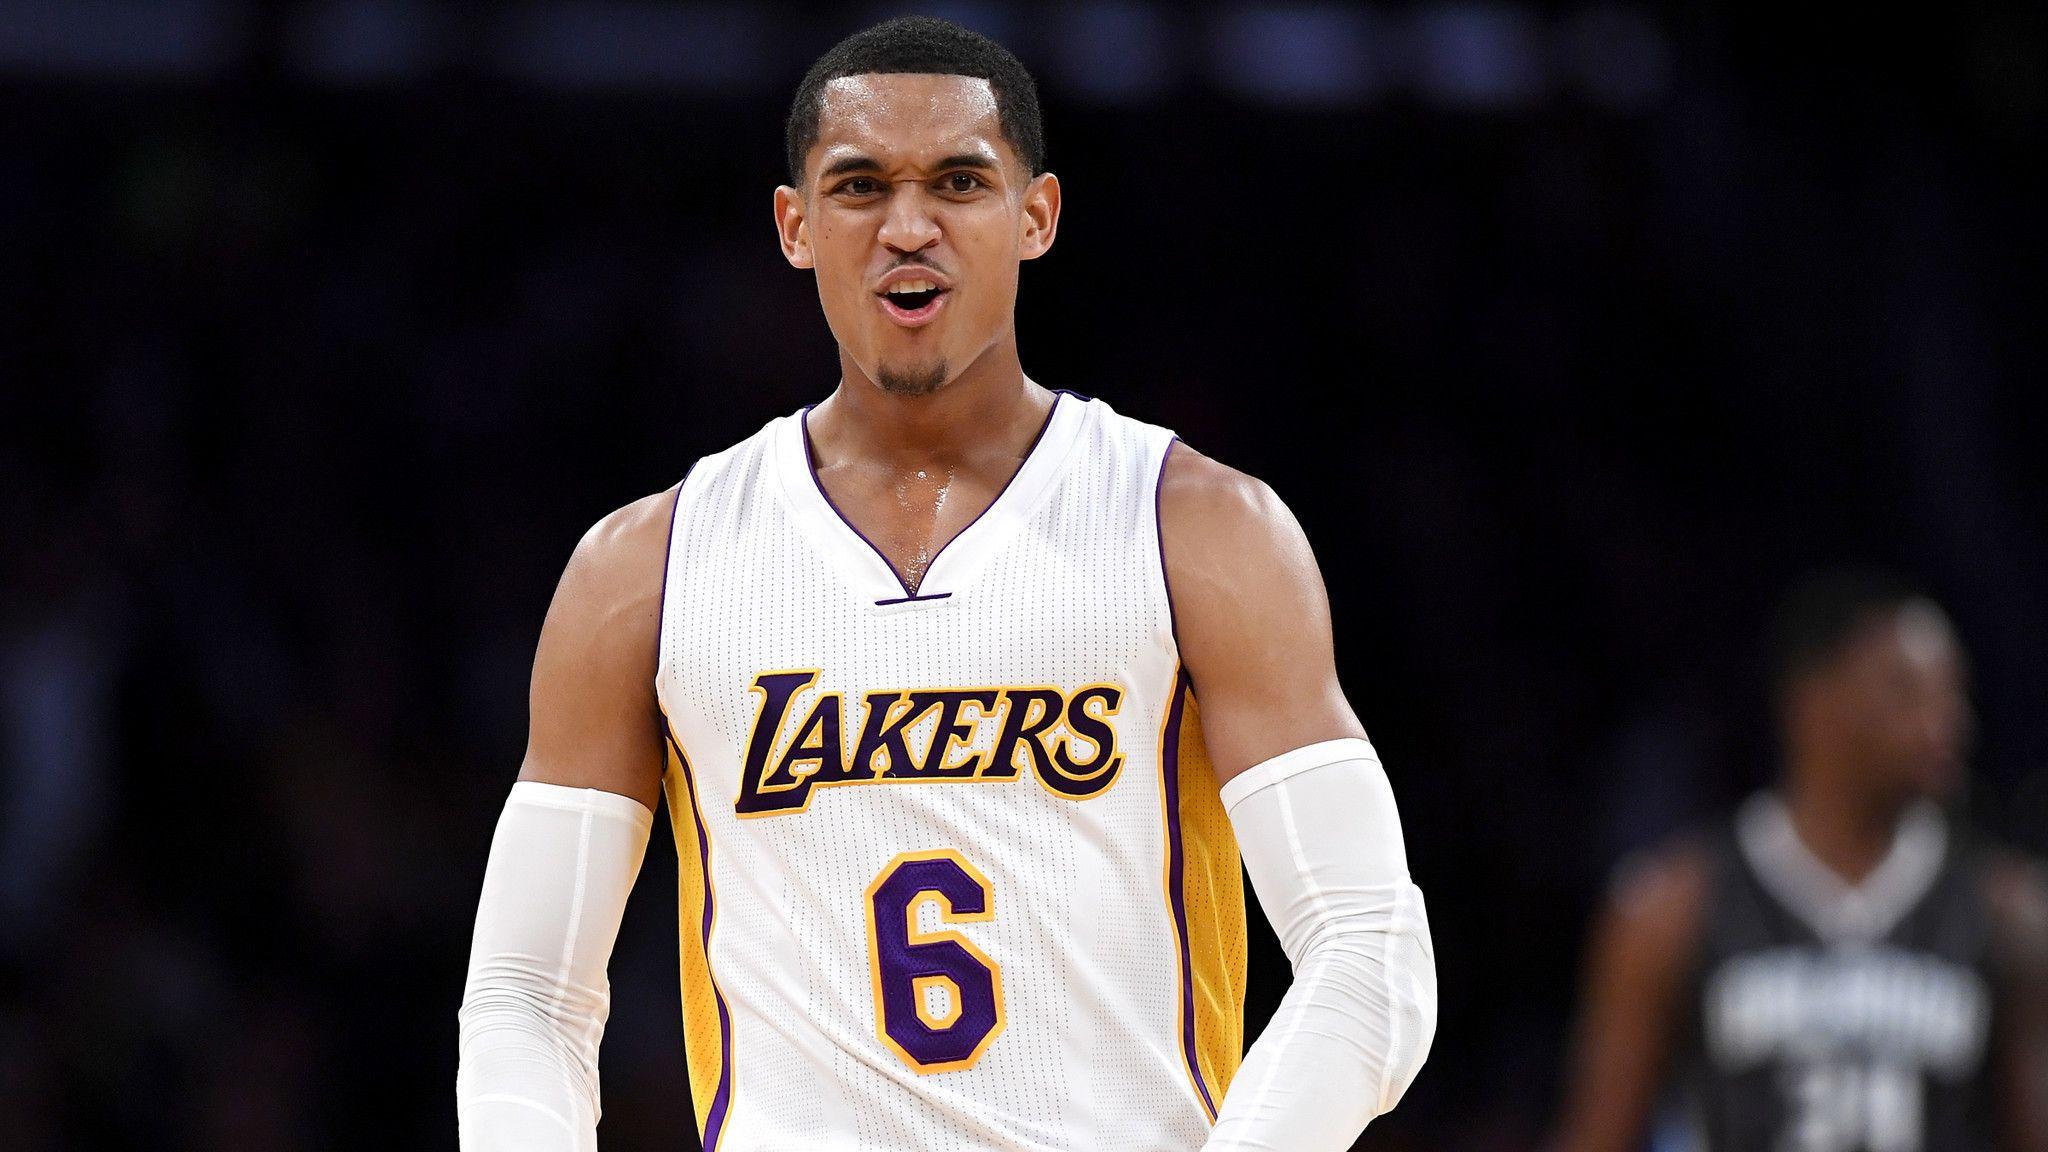 Lakers guard Jordan Clarkson fined $000